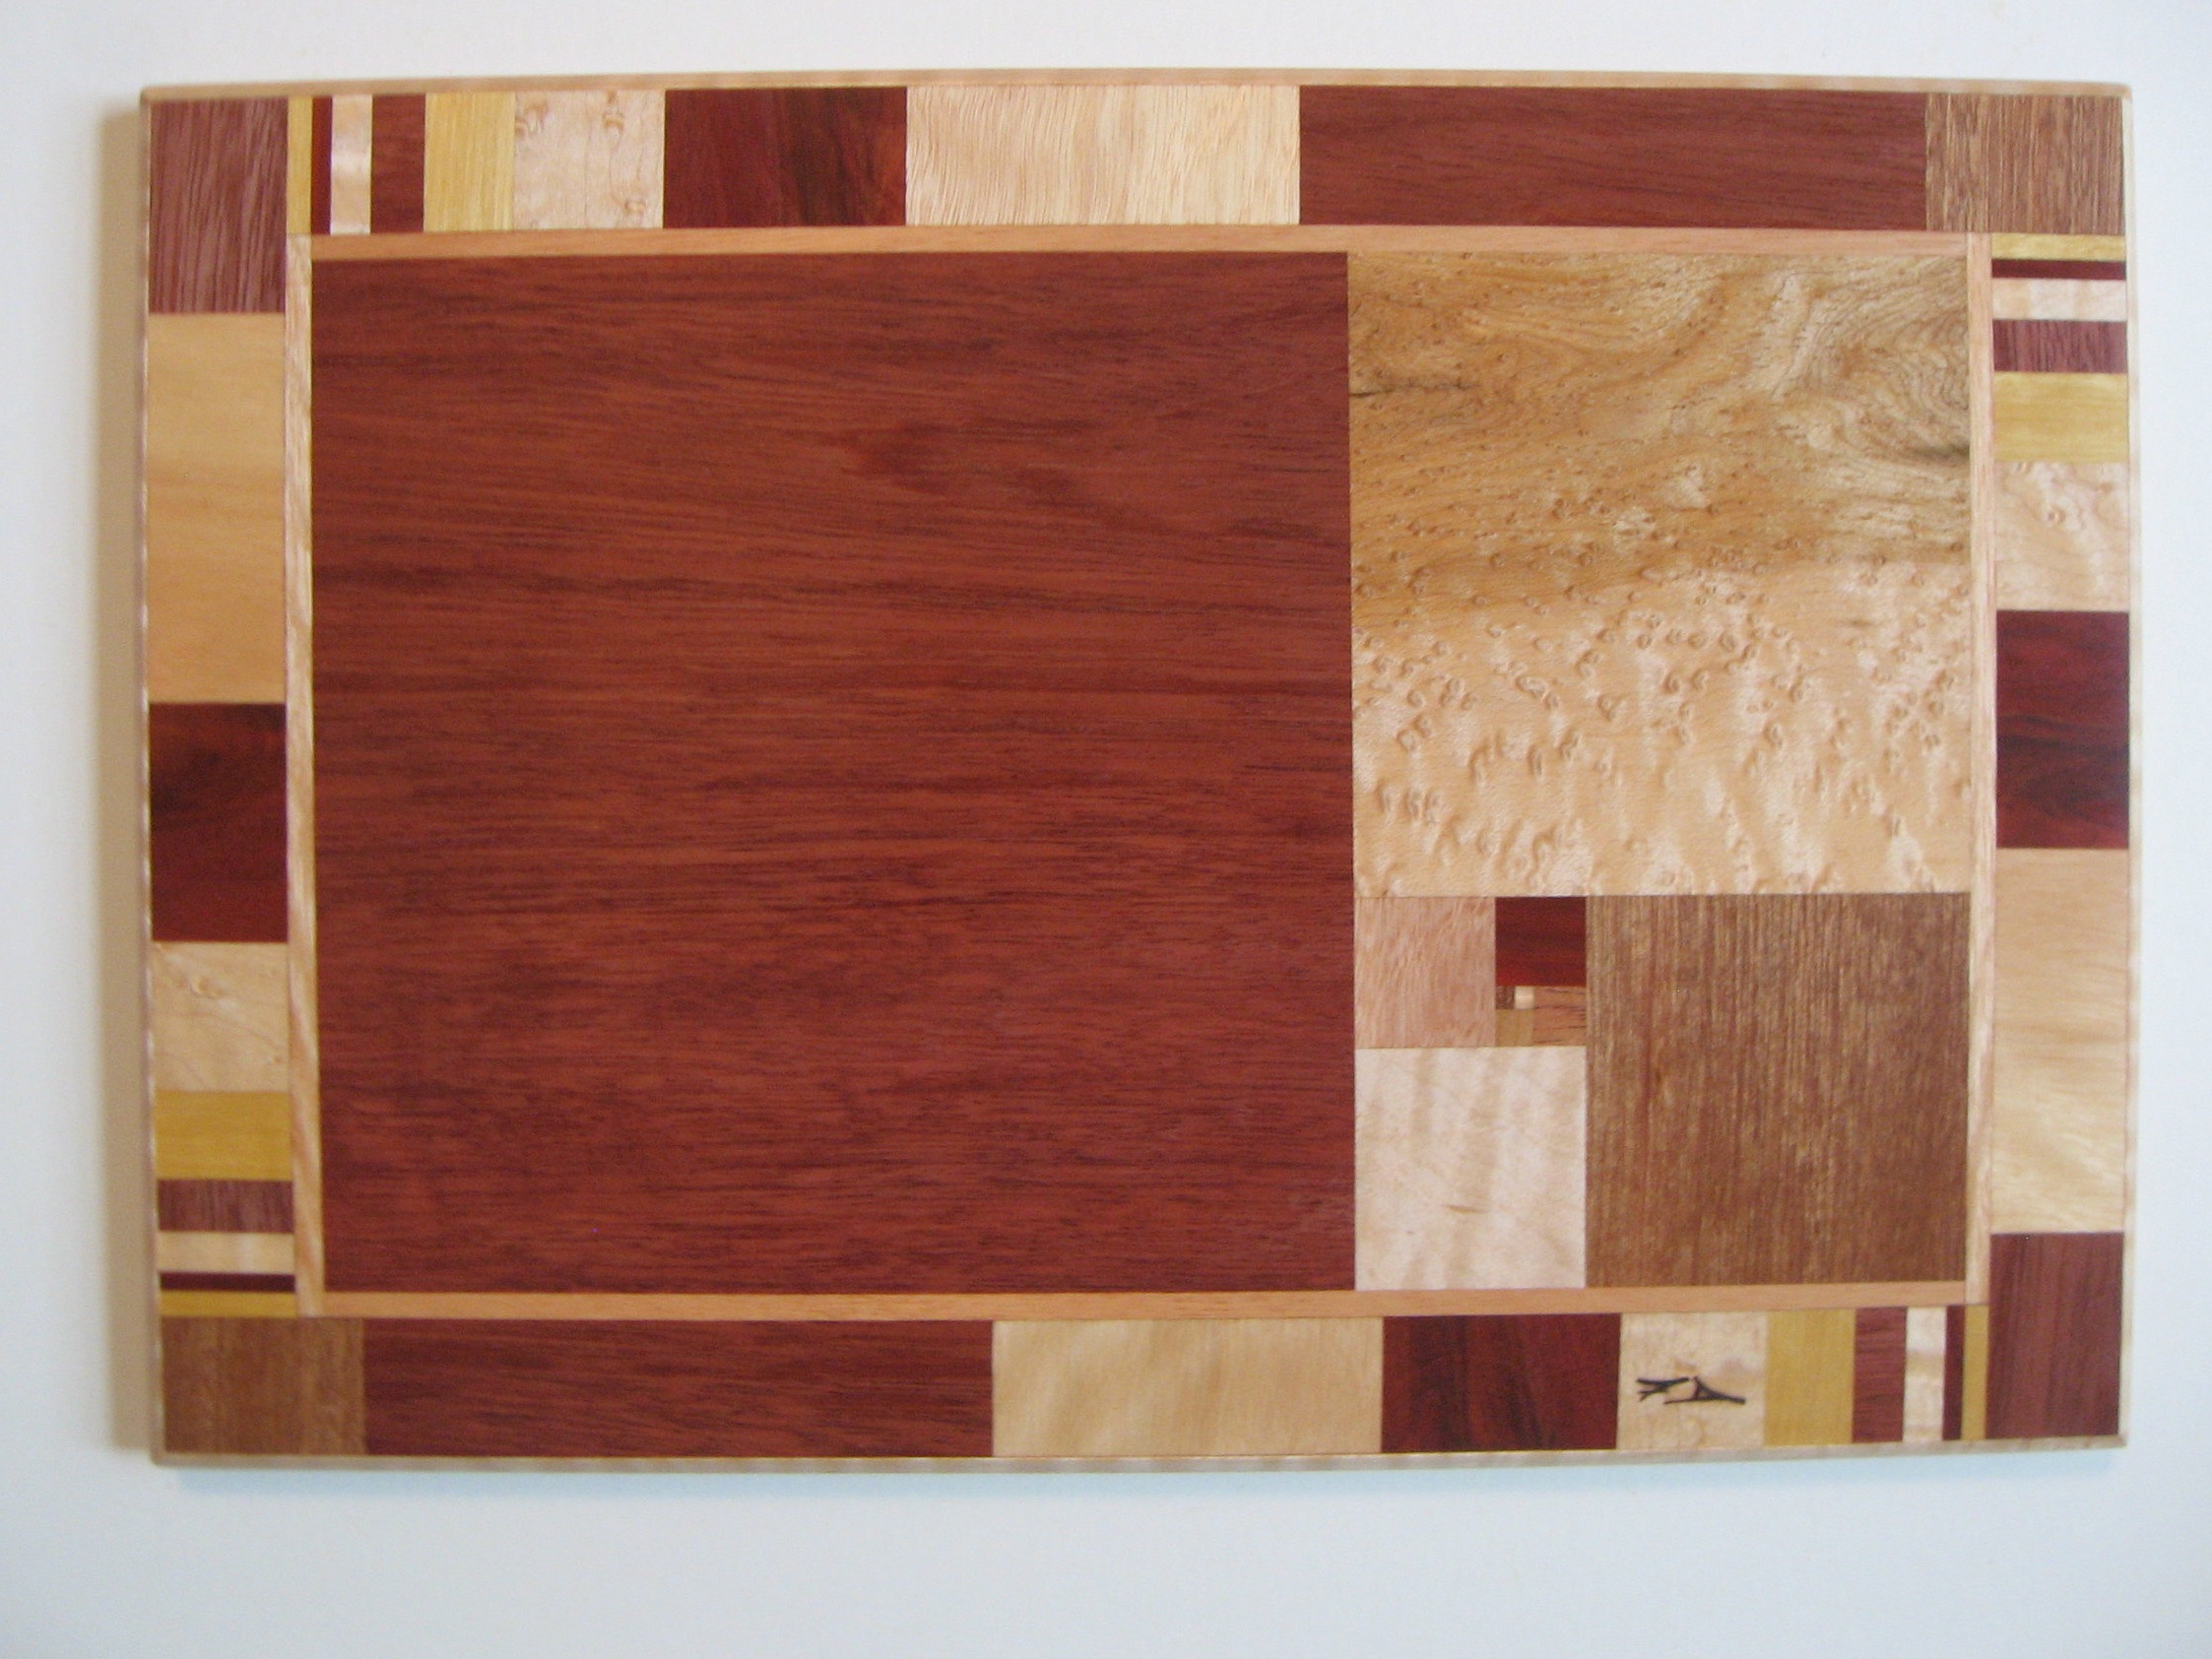  Forrest Doyle - Wooden Cutting Boards, West Hartford, CT 